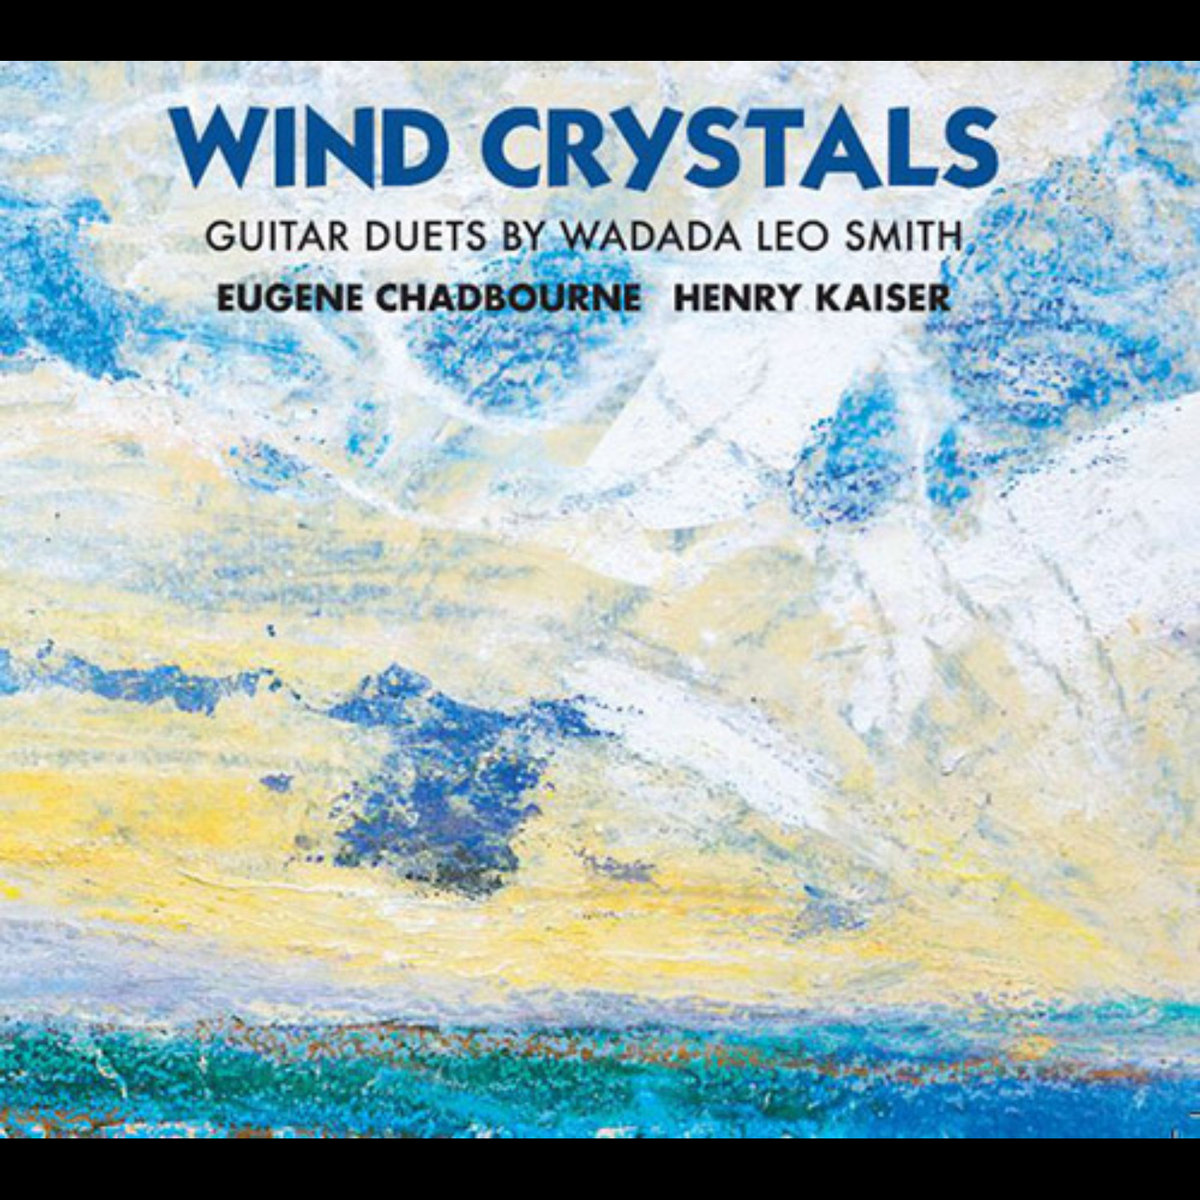 Wind Crystals: Guitar Duets By Wadada Leo Smith album cover